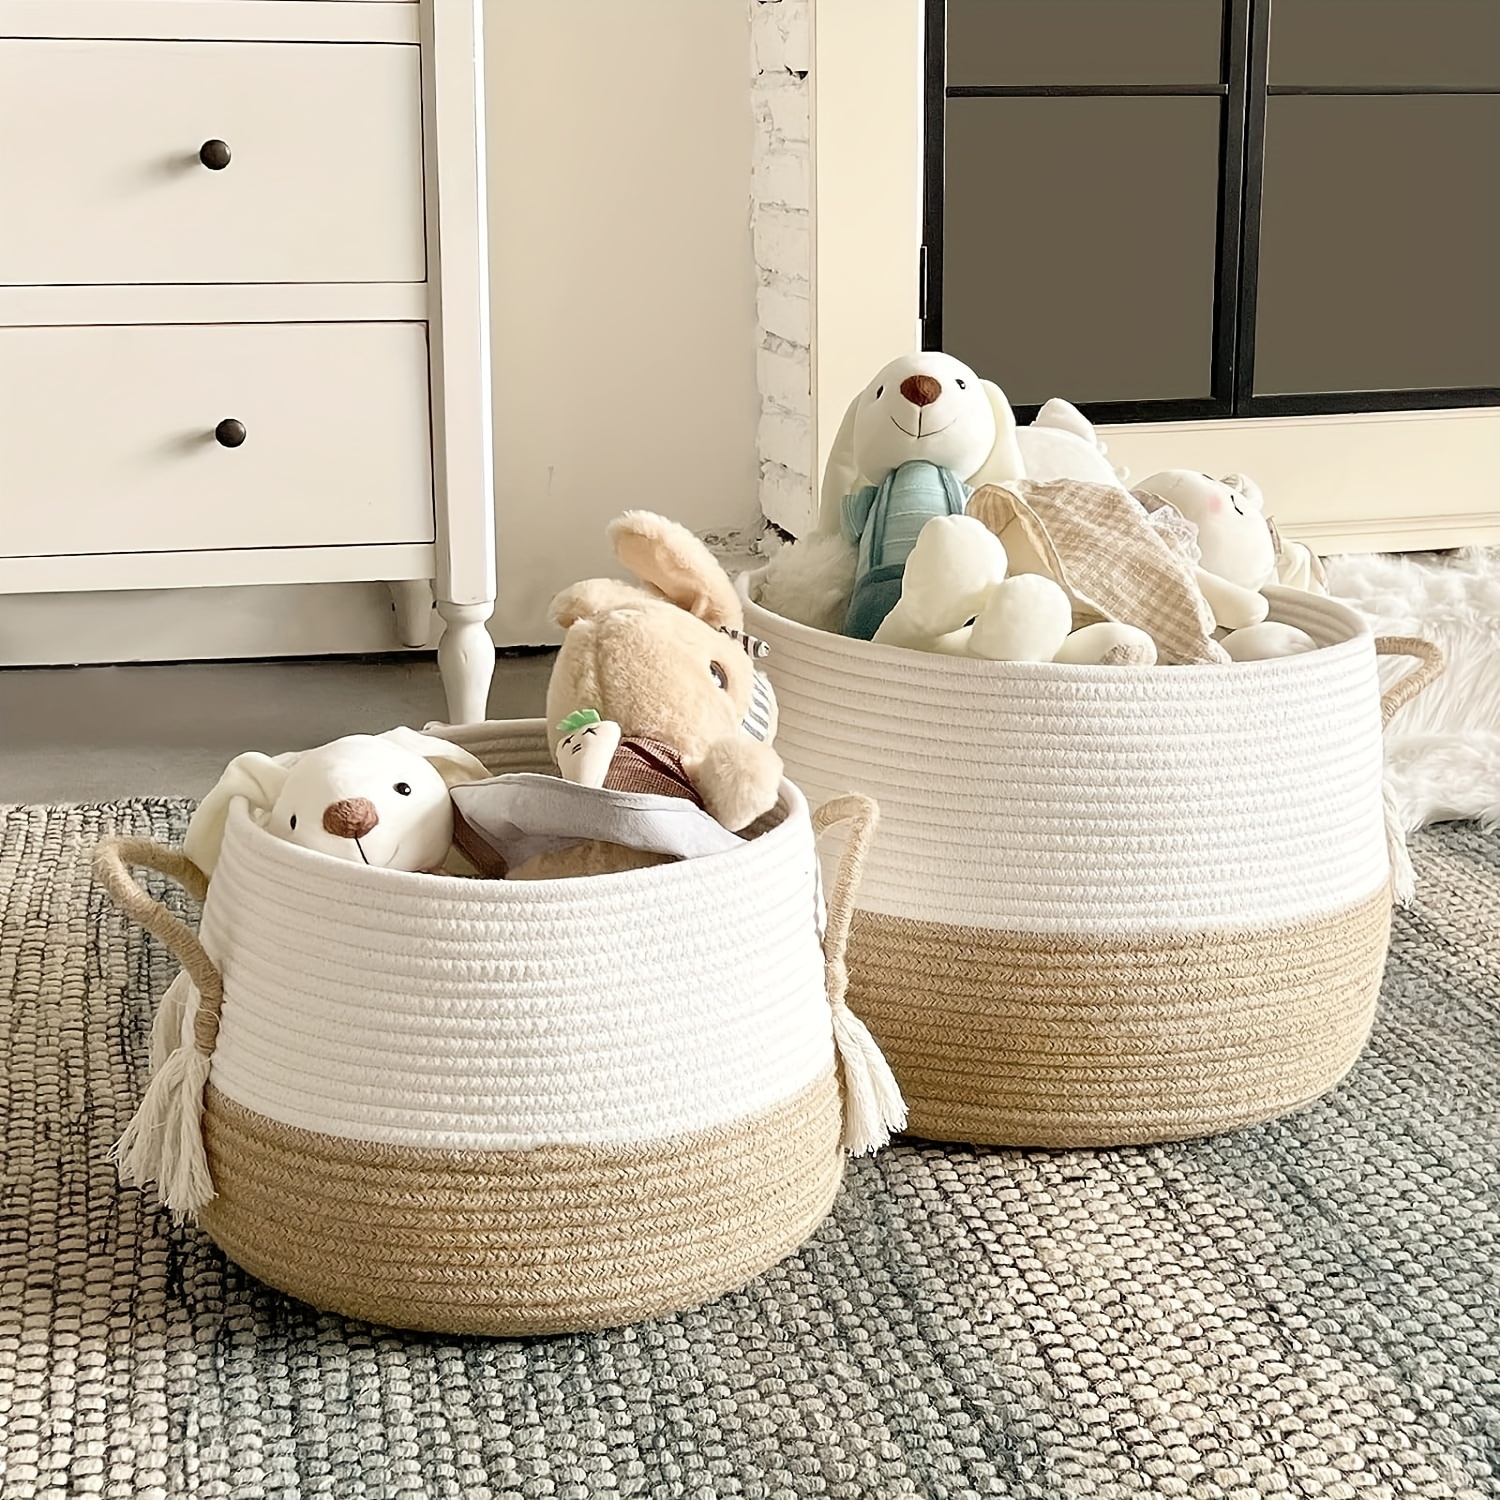 Typutomi Cotton Coiled Rope Basket with Handles Woven Basket for Storage  Nursery Storage Basket Decorative Storage Basket Towel Baskets Laundry  Basket